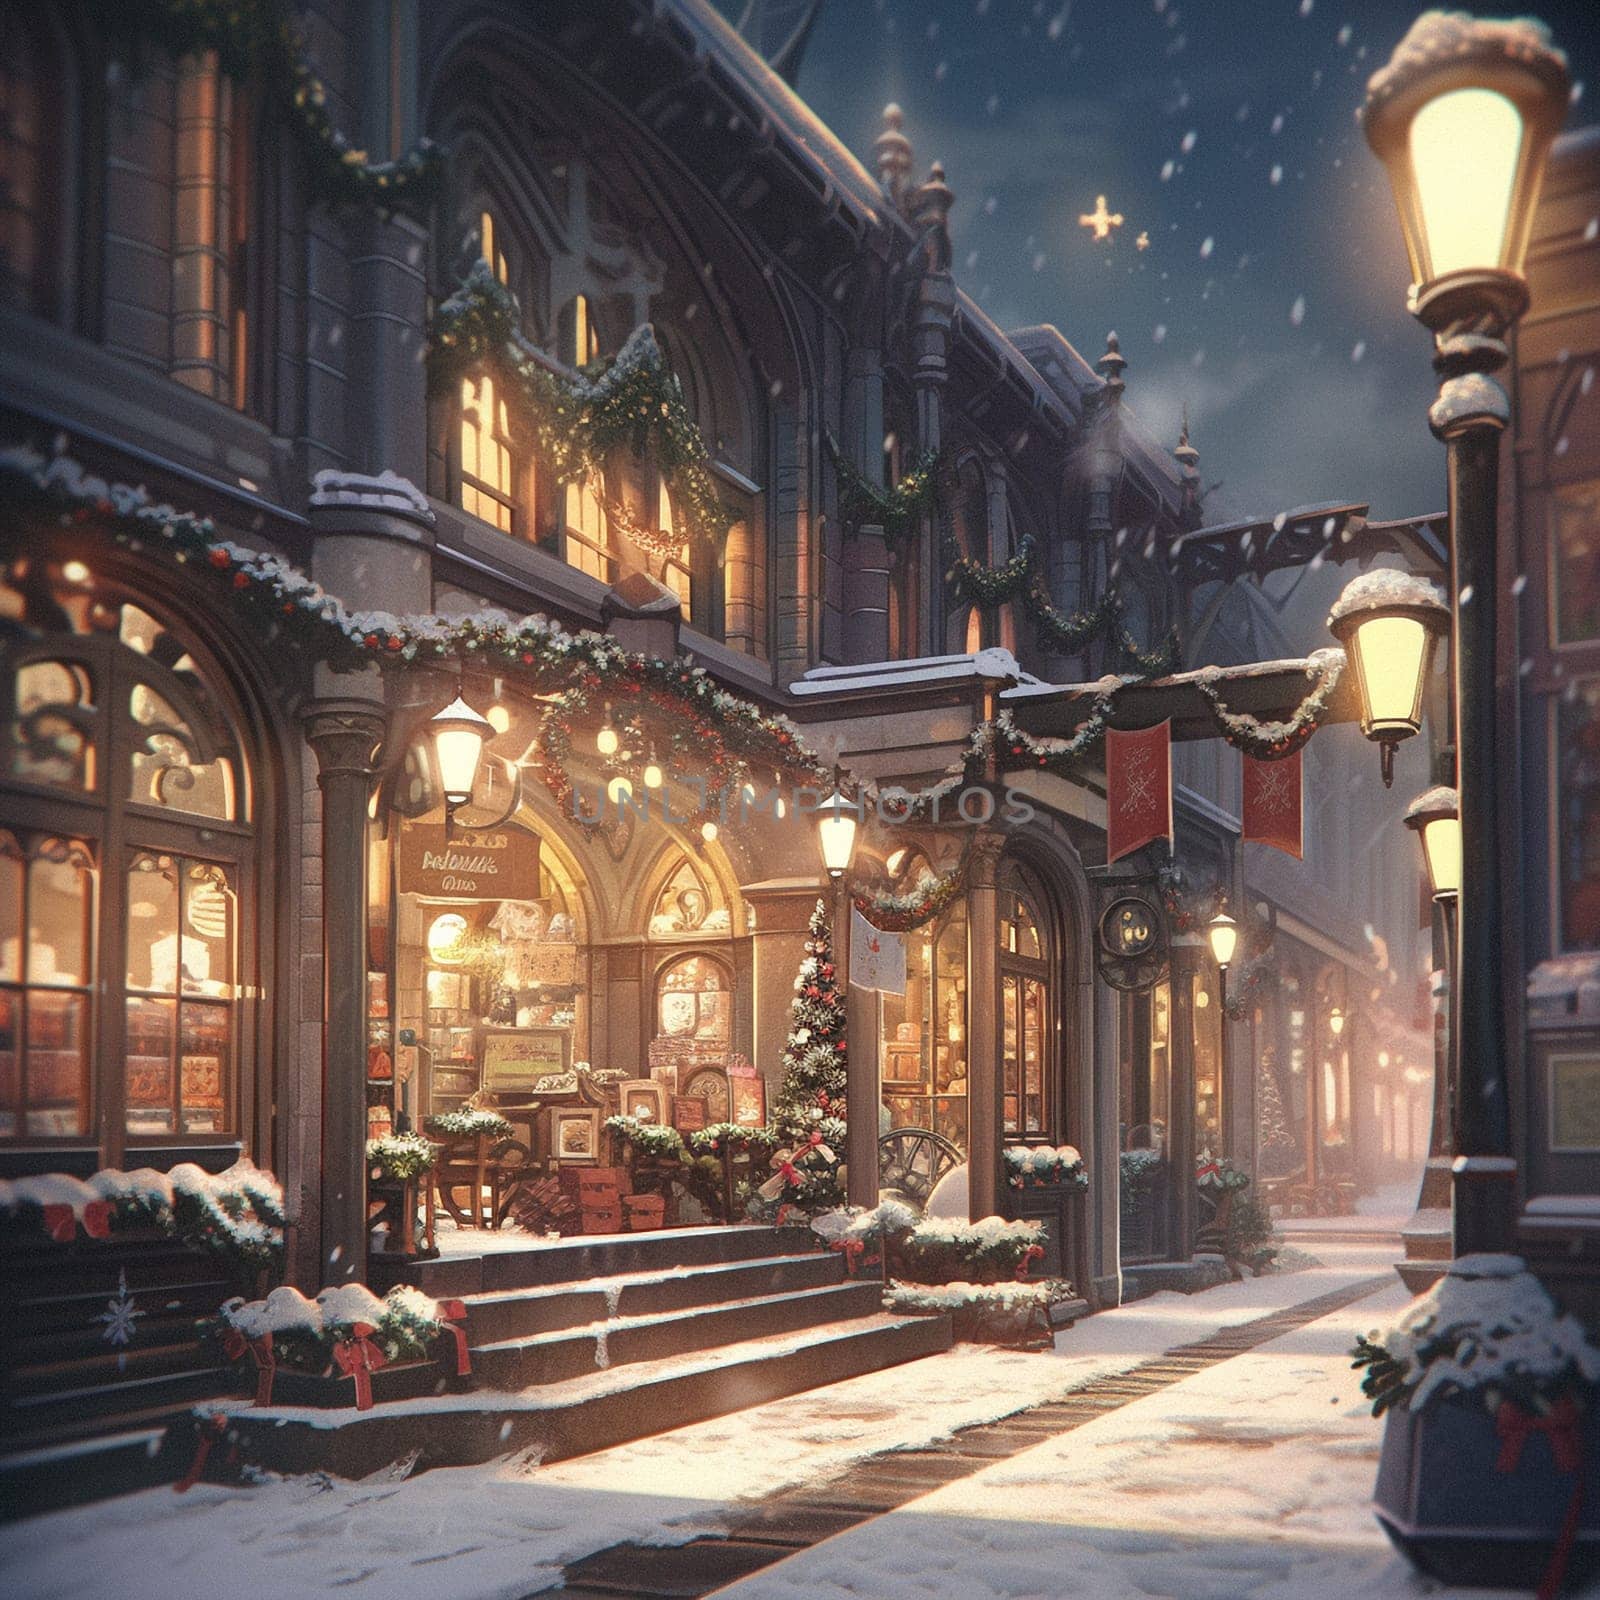 Beautiful Christmas street by NeuroSky